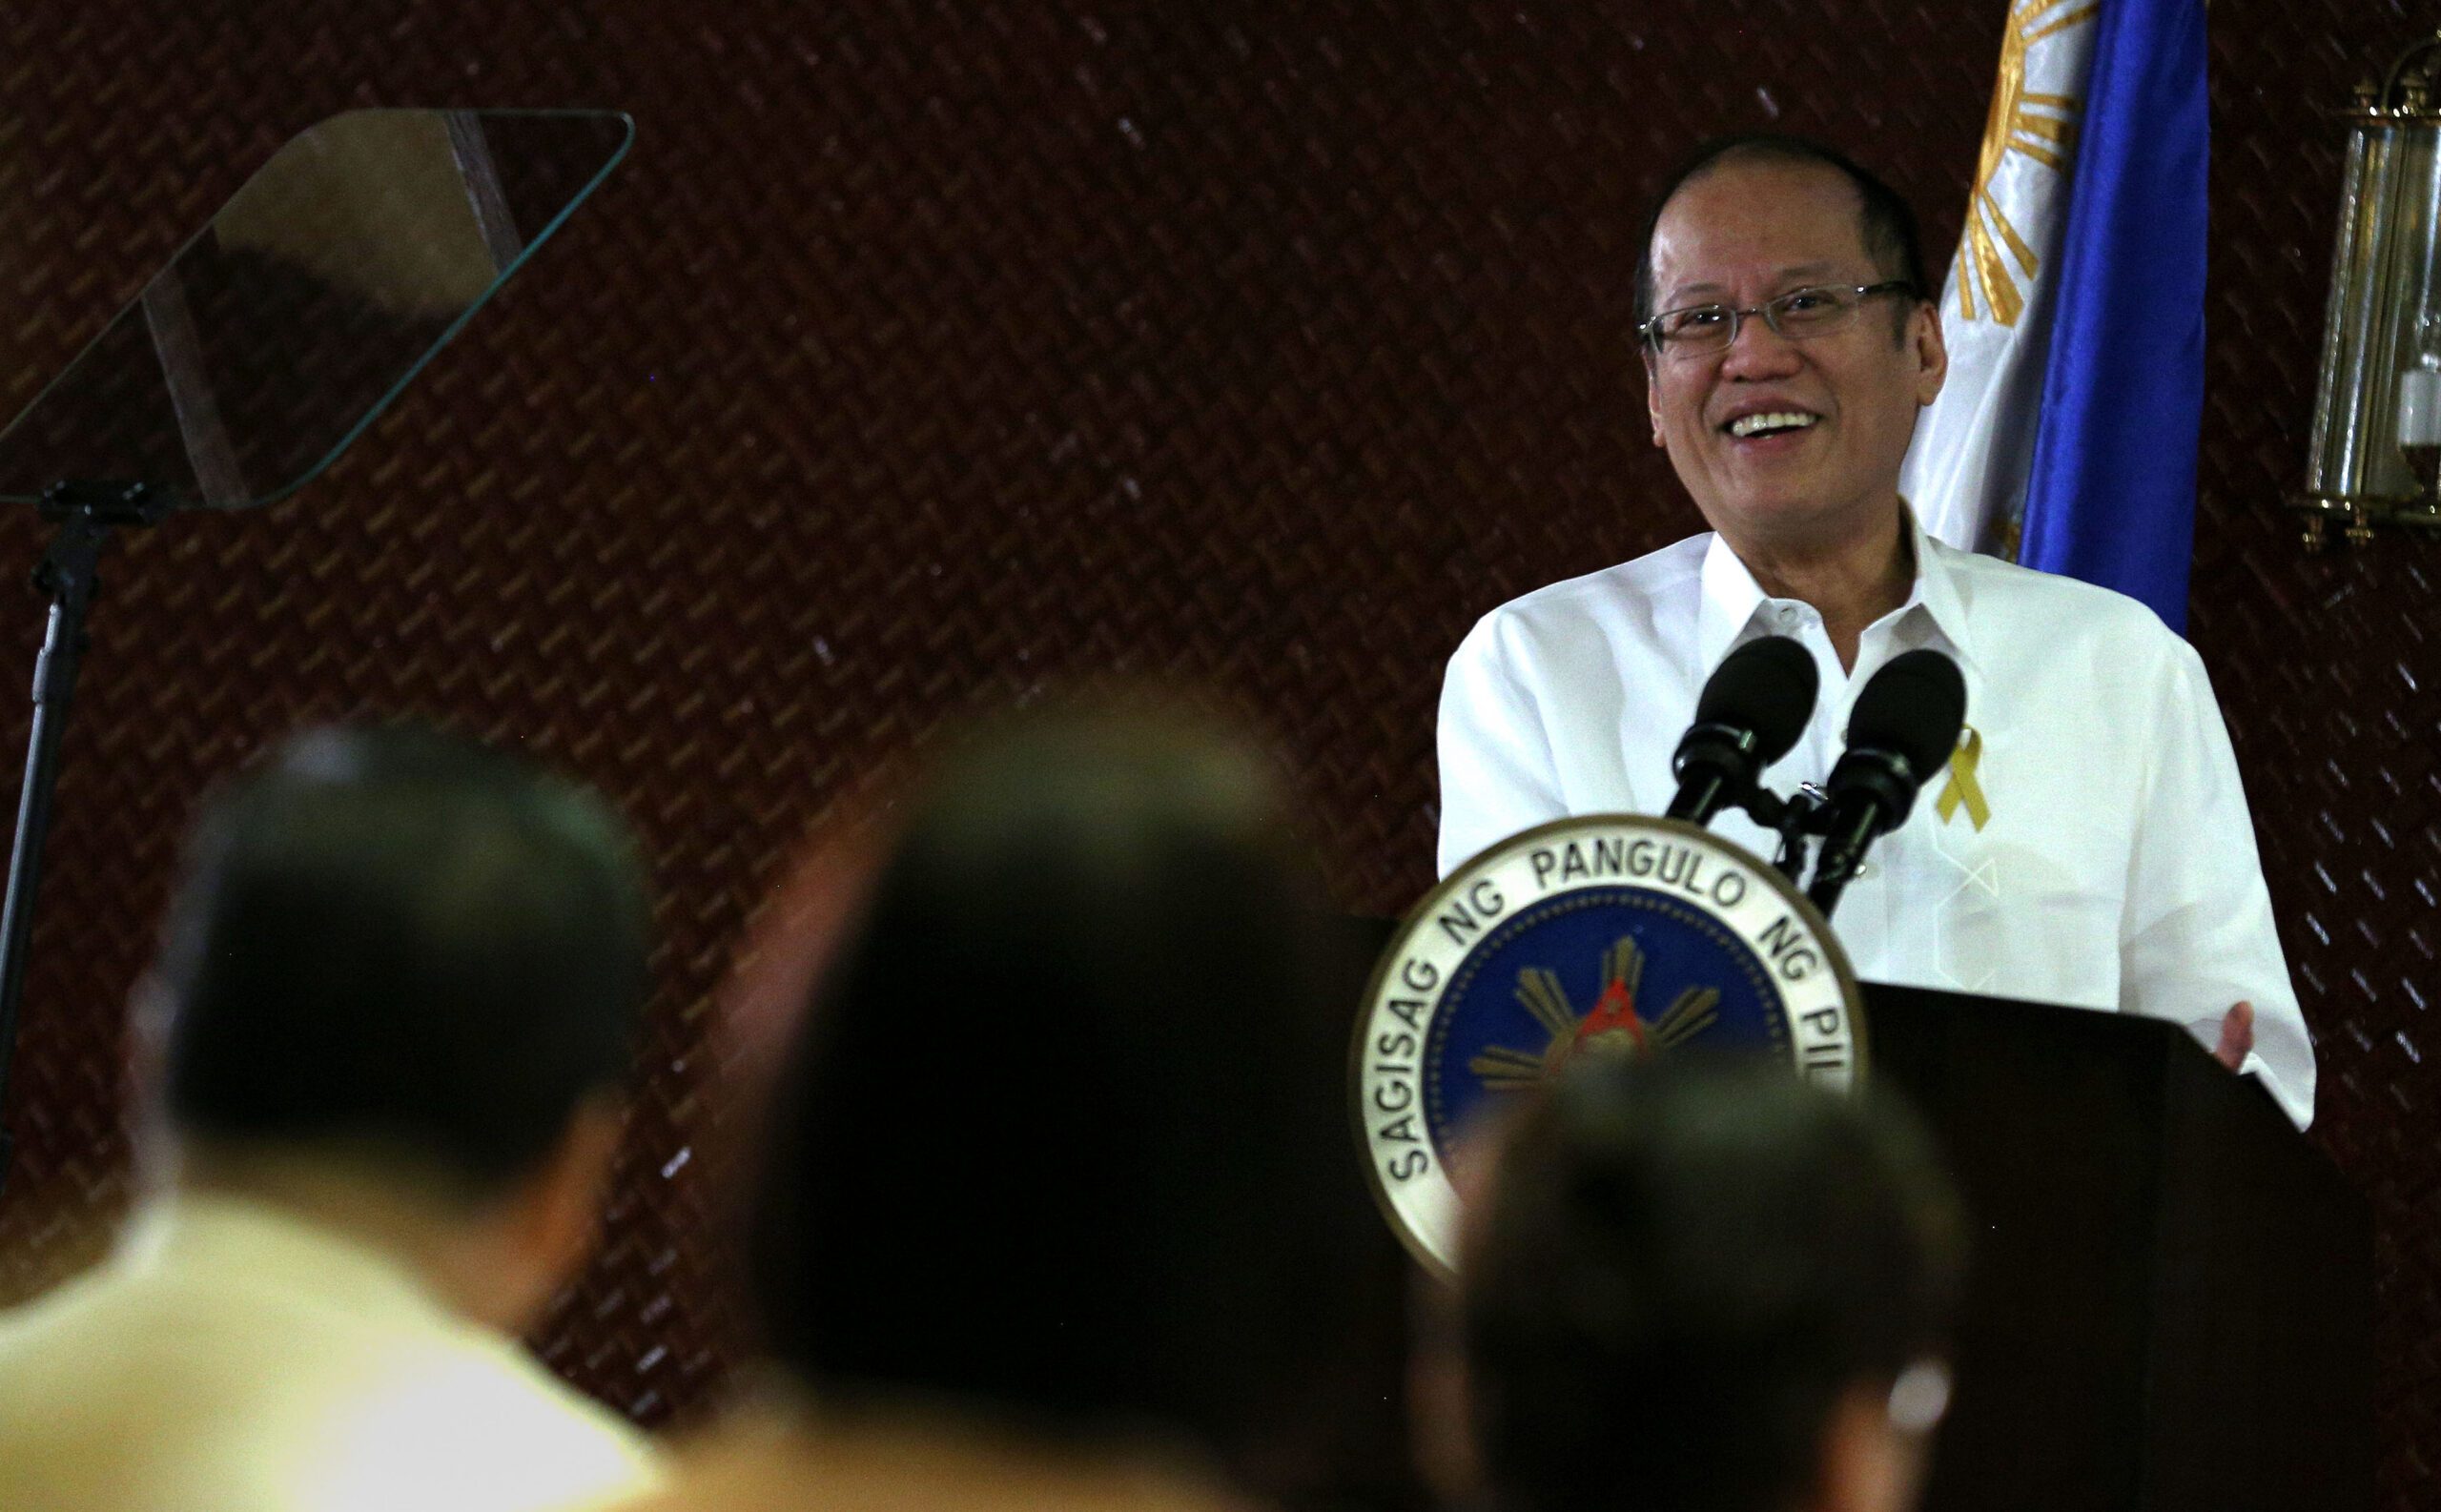 Majority of Filipinos approve of Aquino’s work – Pulse Asia survey